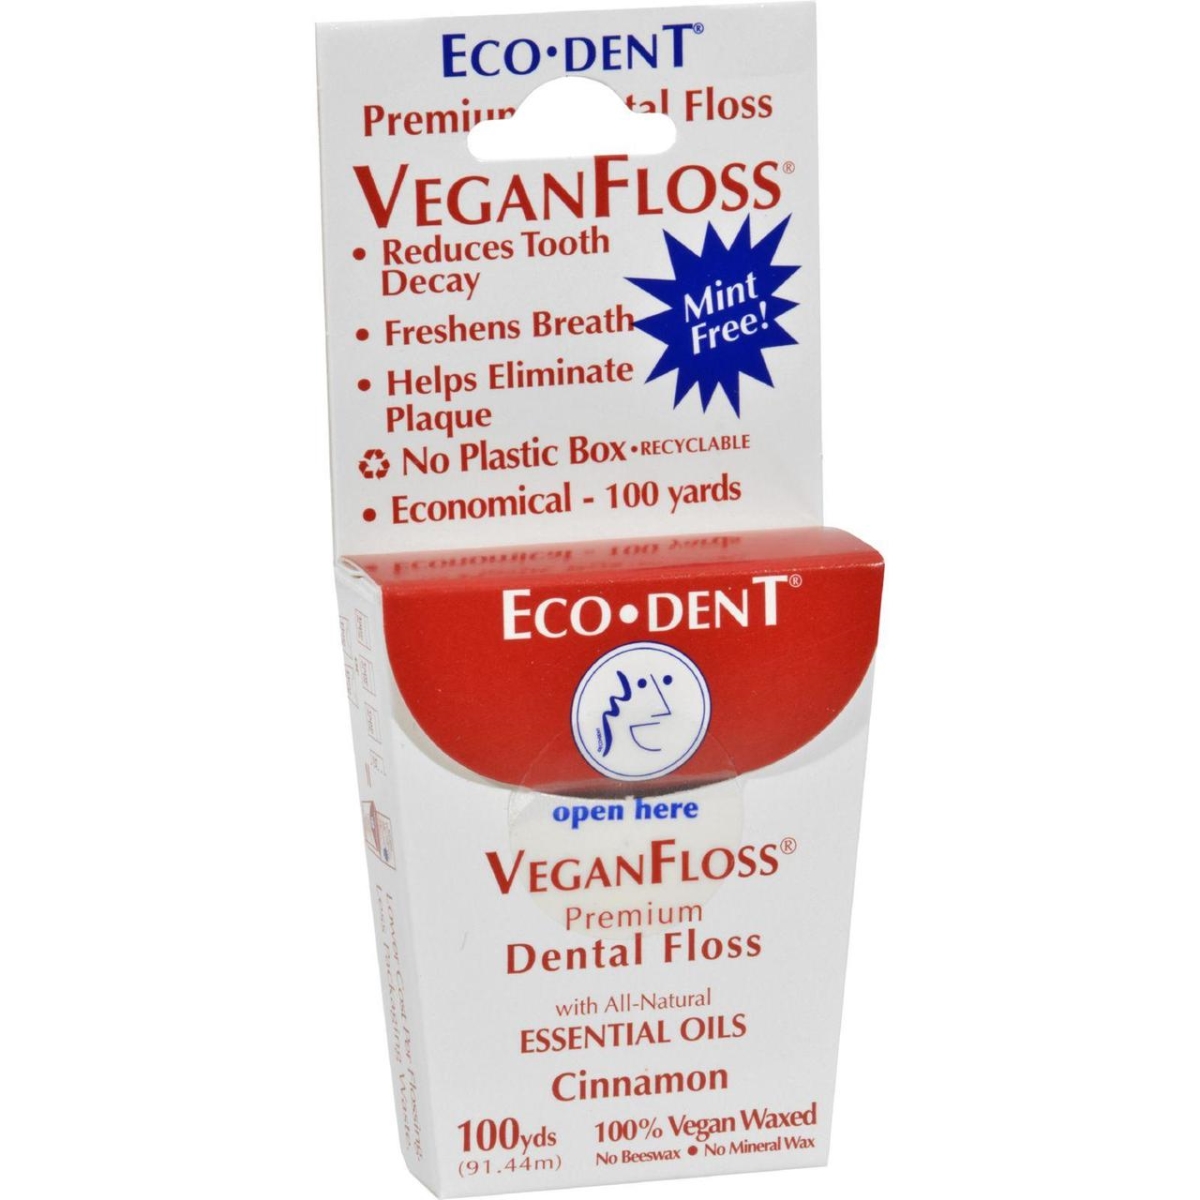 Hg0623405 Veganfloss Premium Dental Floss Cinnamon - 100 Yard, Case Of 6